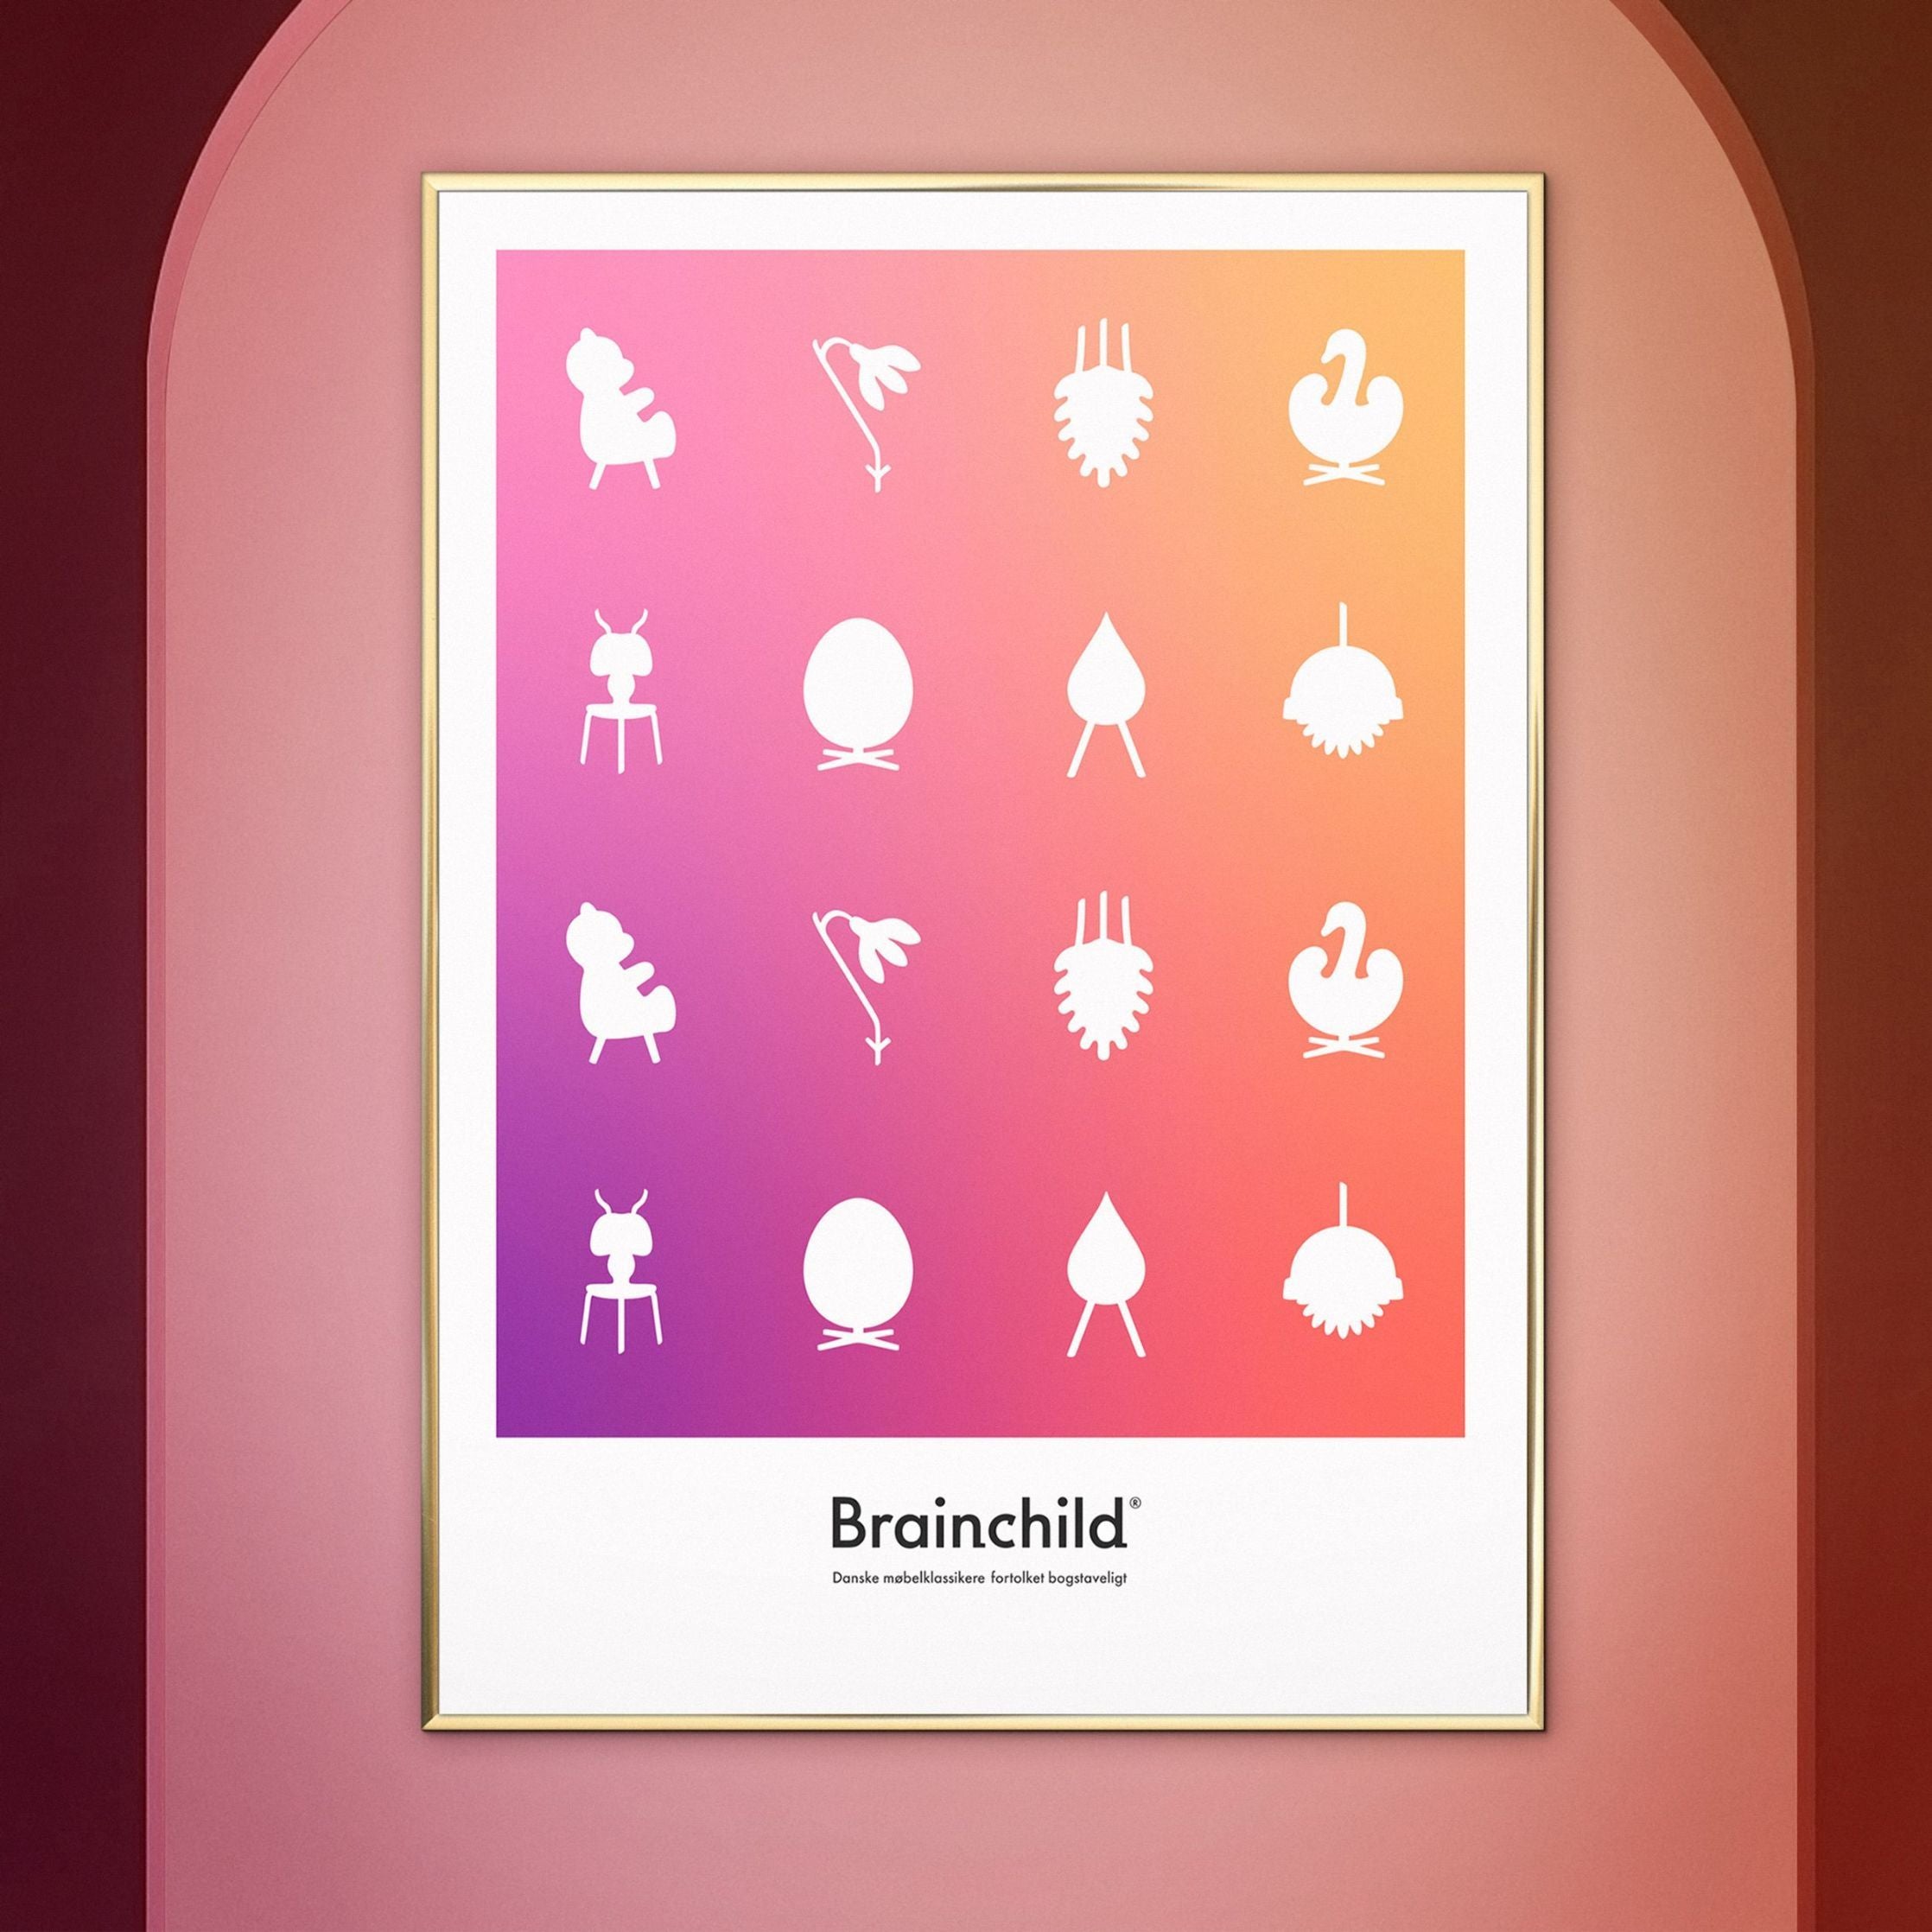 Brainchild Design Icon Poster, Rahmen aus schwarz lackiertem Holz A5, Farbe